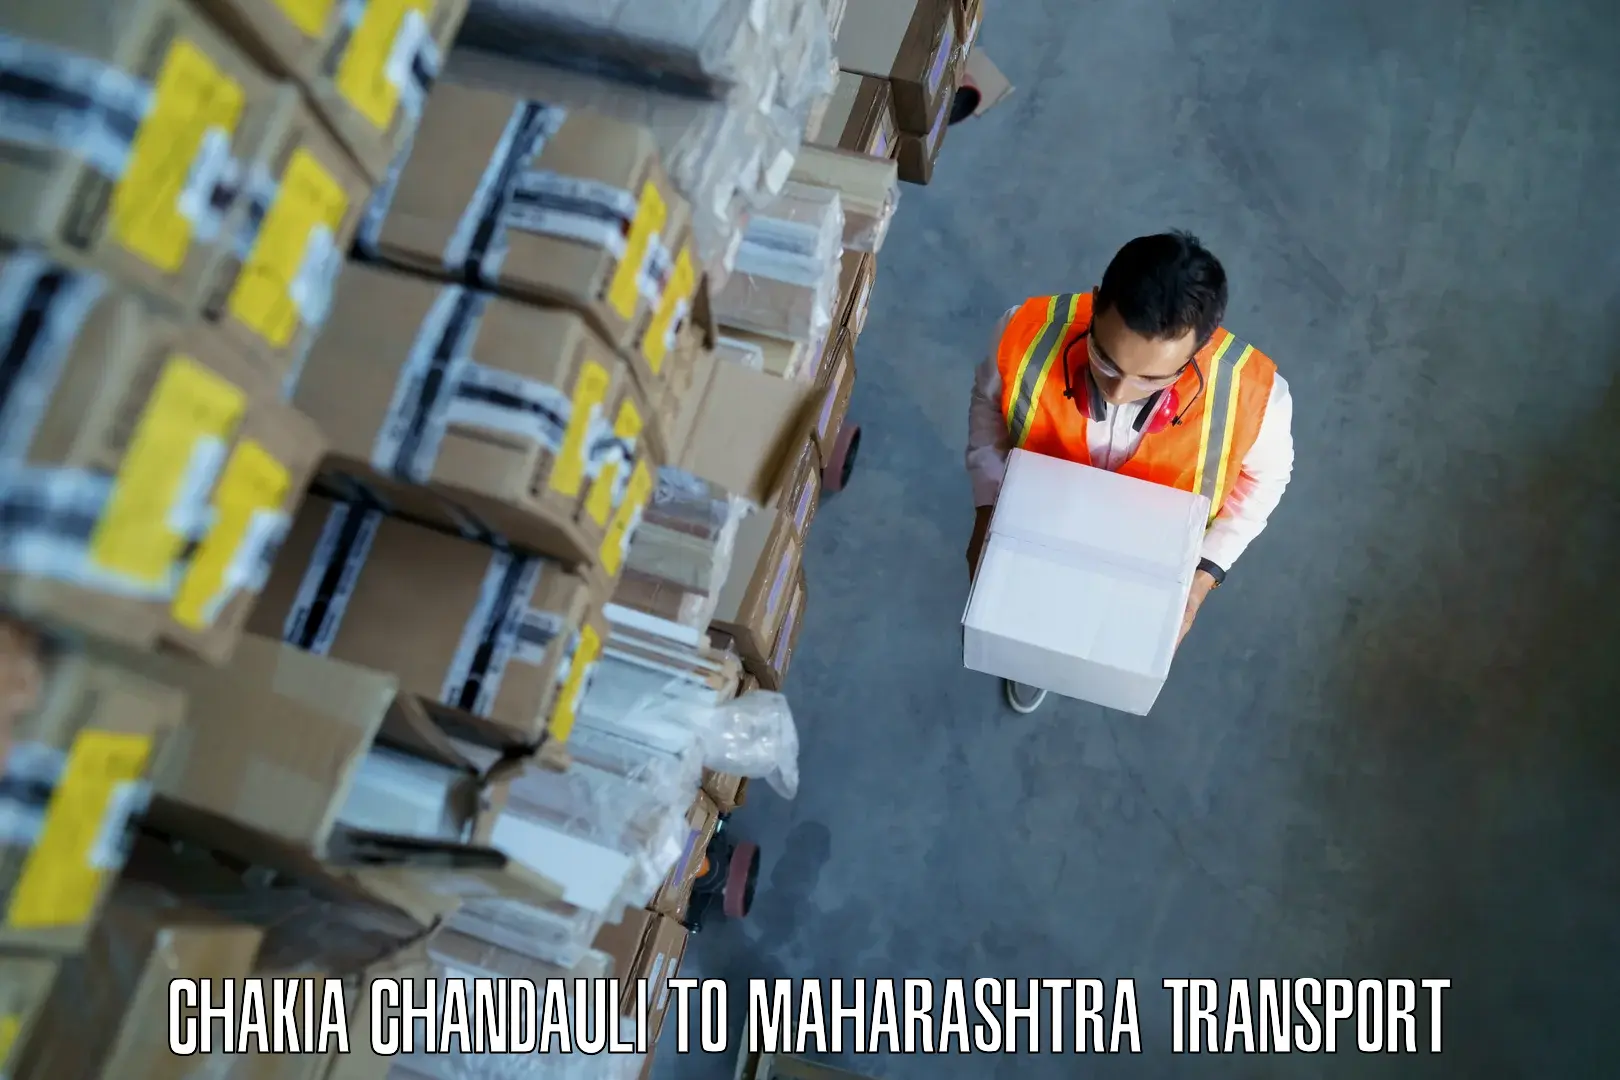 Air freight transport services Chakia Chandauli to Nagothane